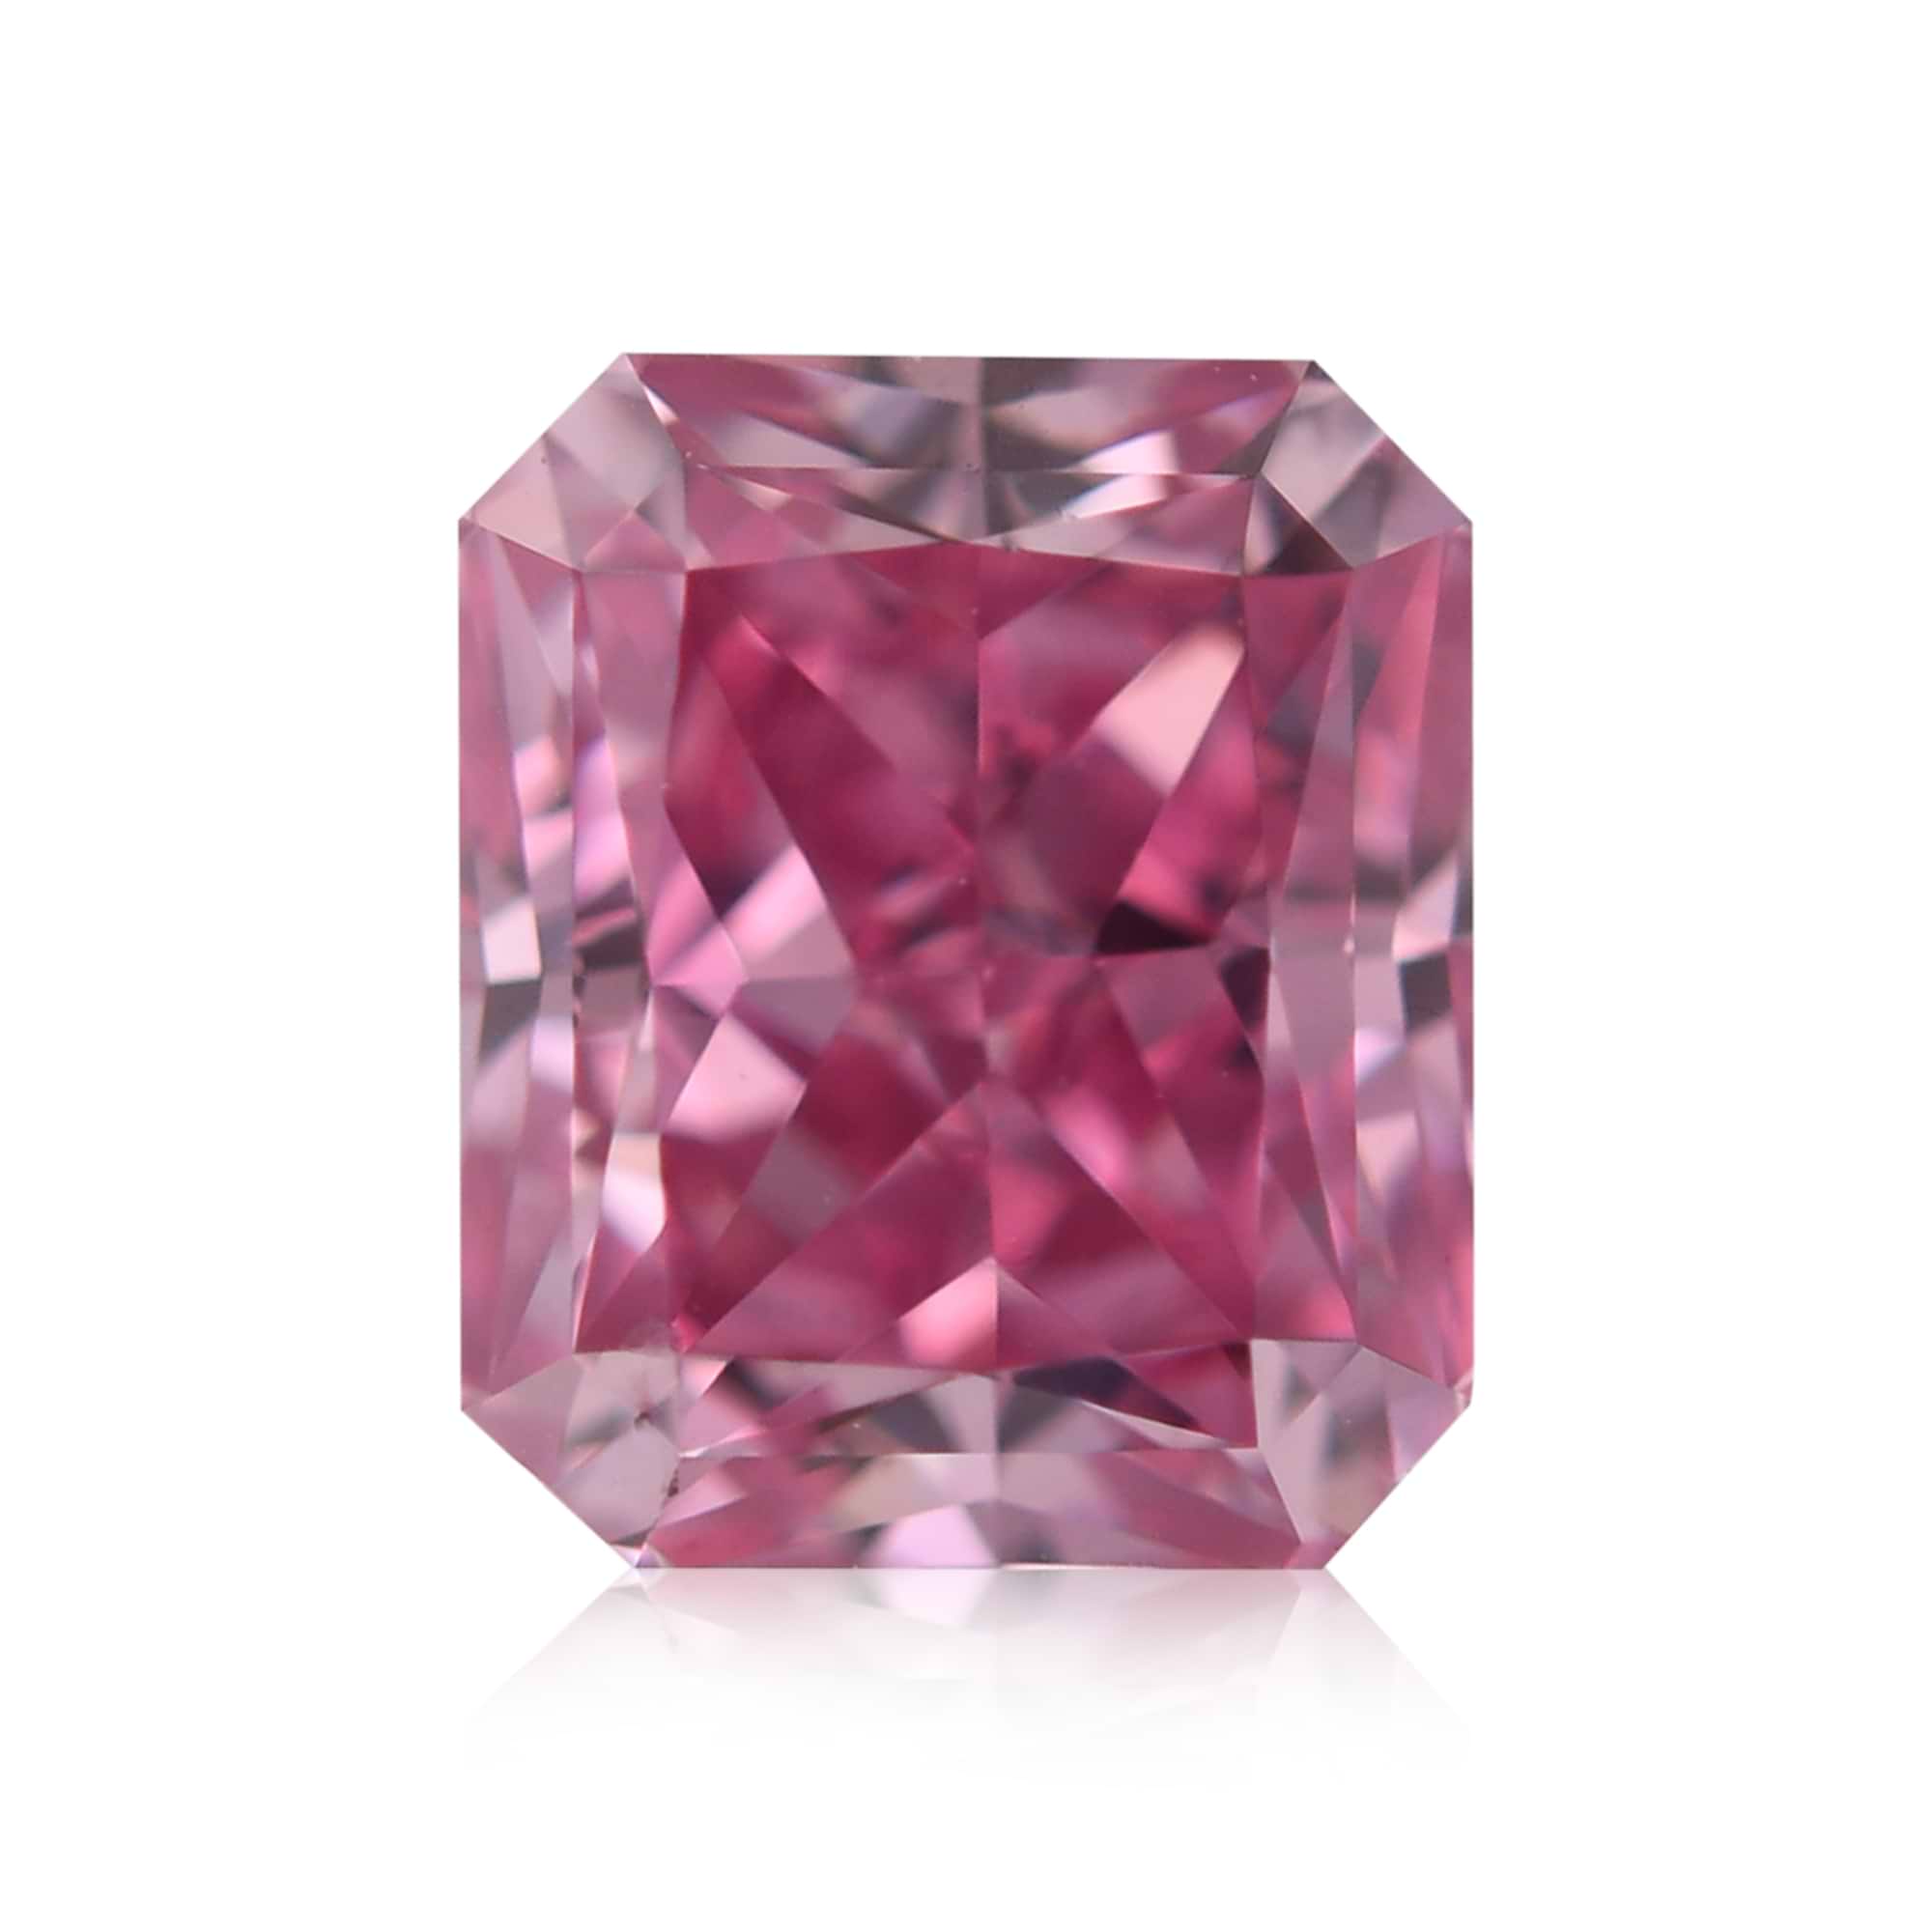 LEIBISH 0.82 carat, Fancy Vivid Purplish Pink Diamond, 3PP, Radiant Shape, SI1 Clarity, GIA & ARGYLE